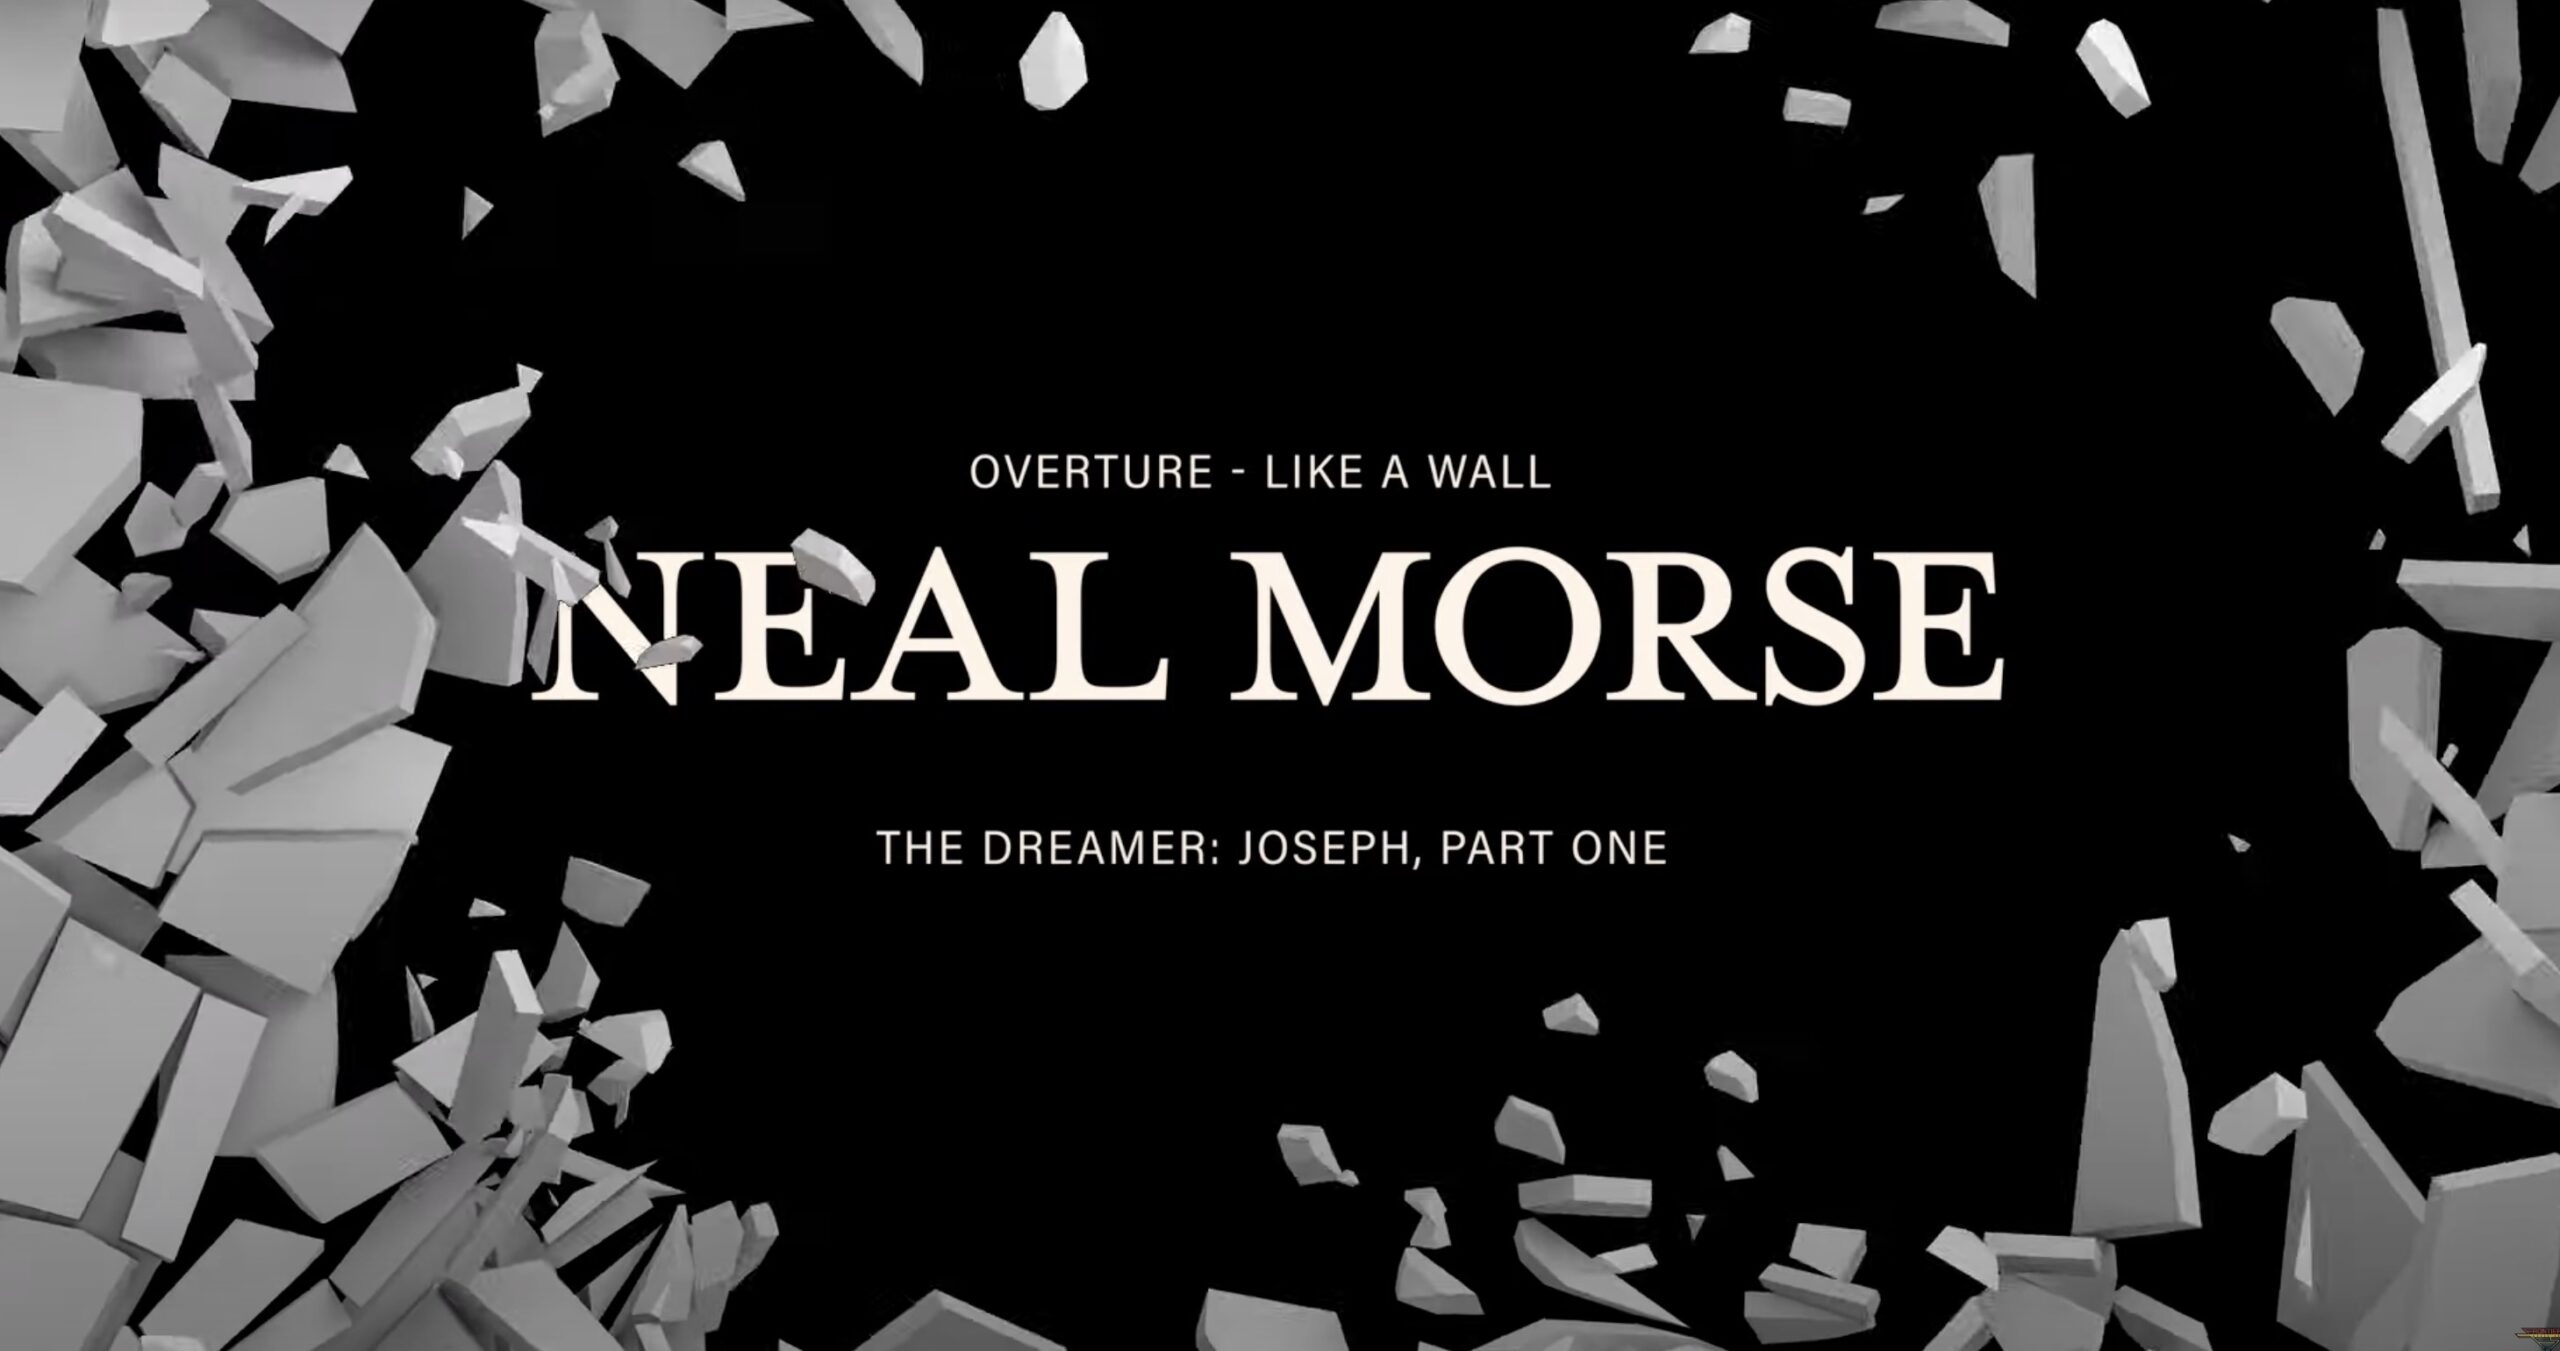 Neal Morse announces new concept album 'The Dreamer Joseph Part One